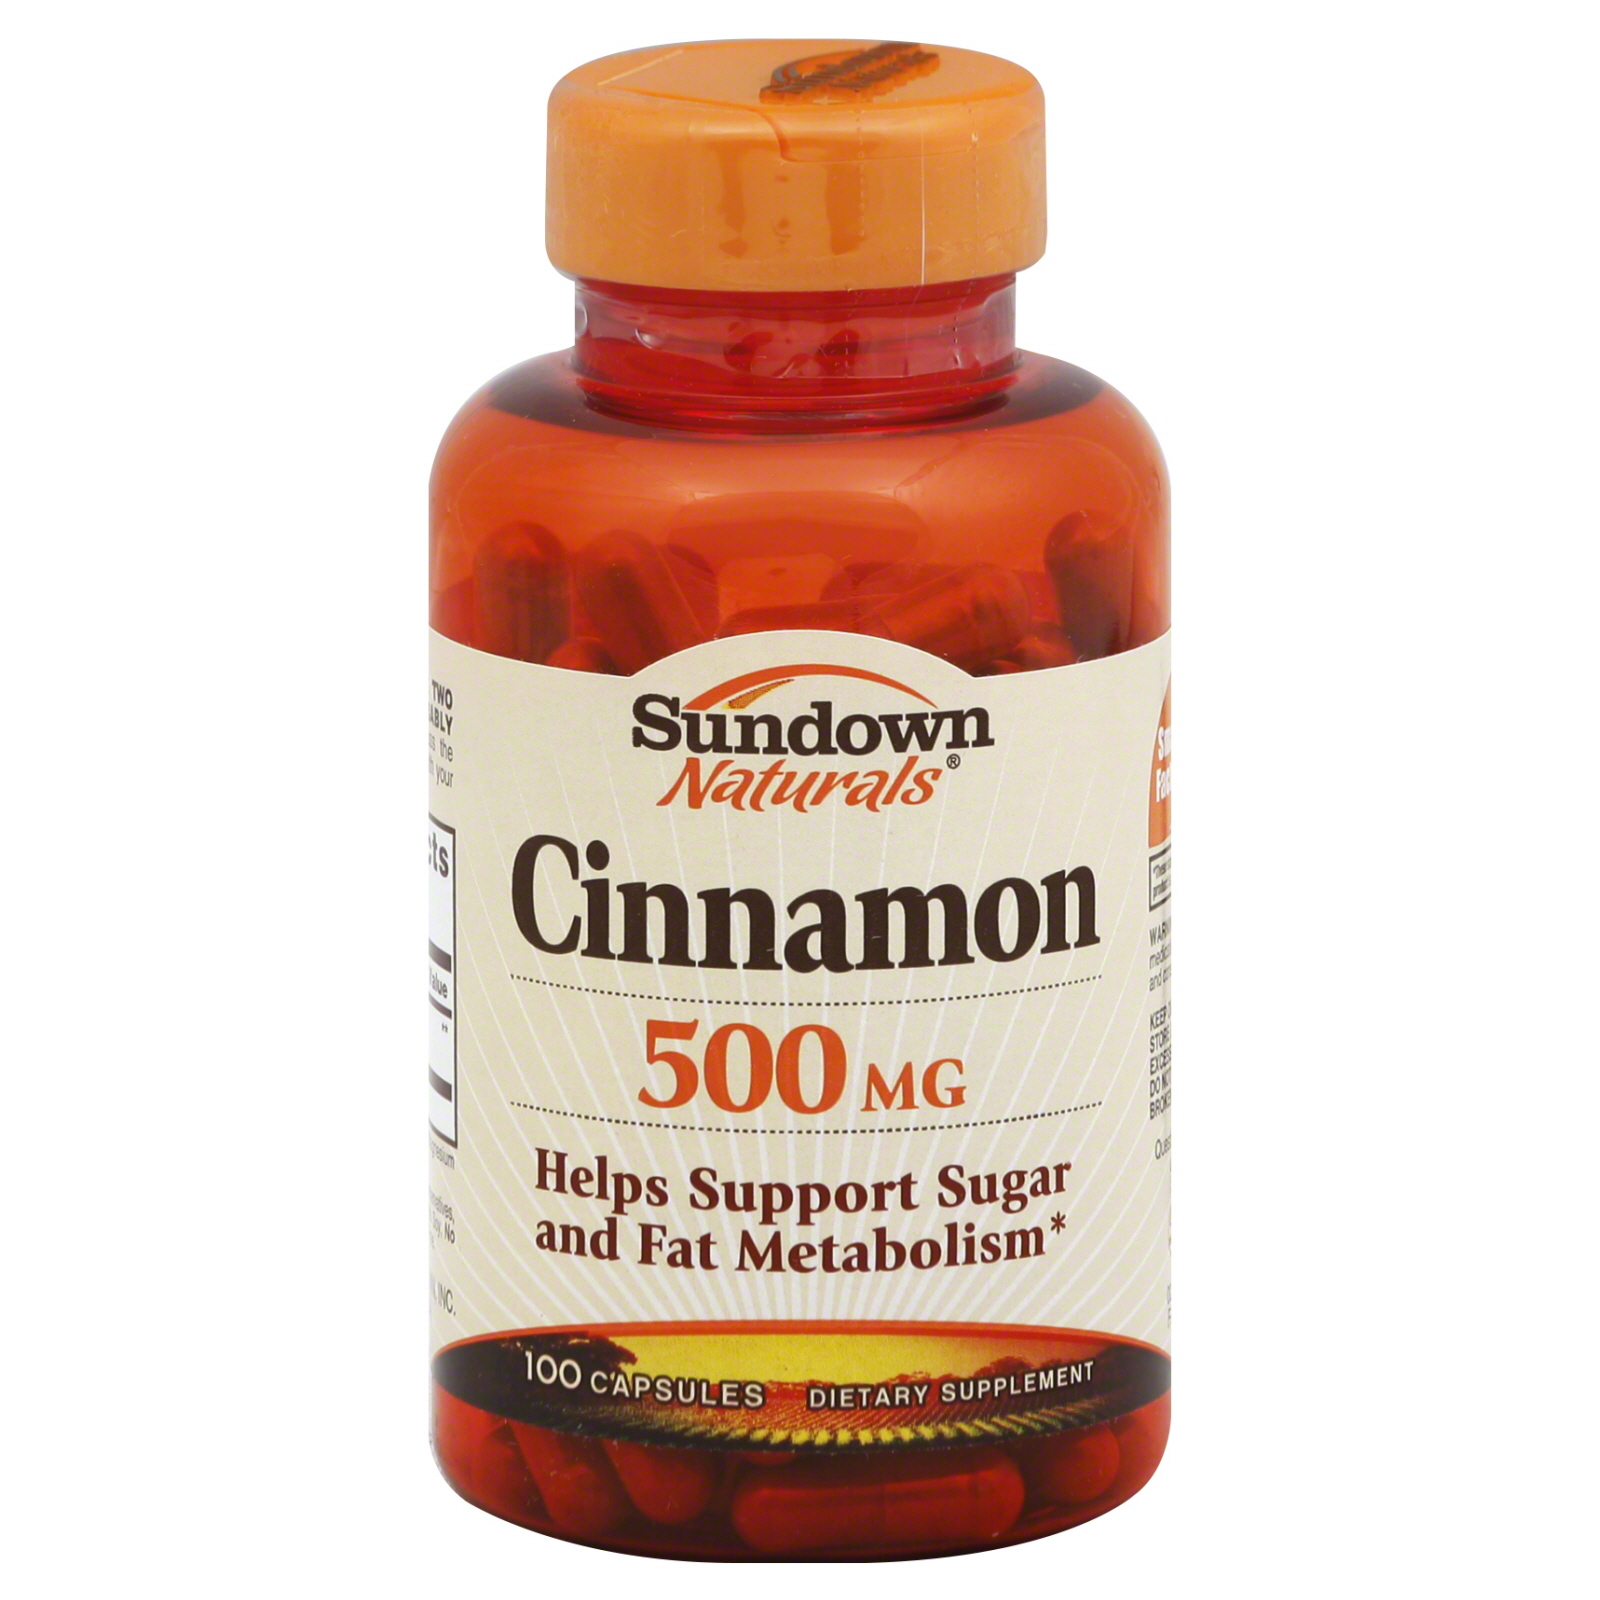 Sundown Naturals Cinnamon, 500 mg, Capsules, 100 capsules